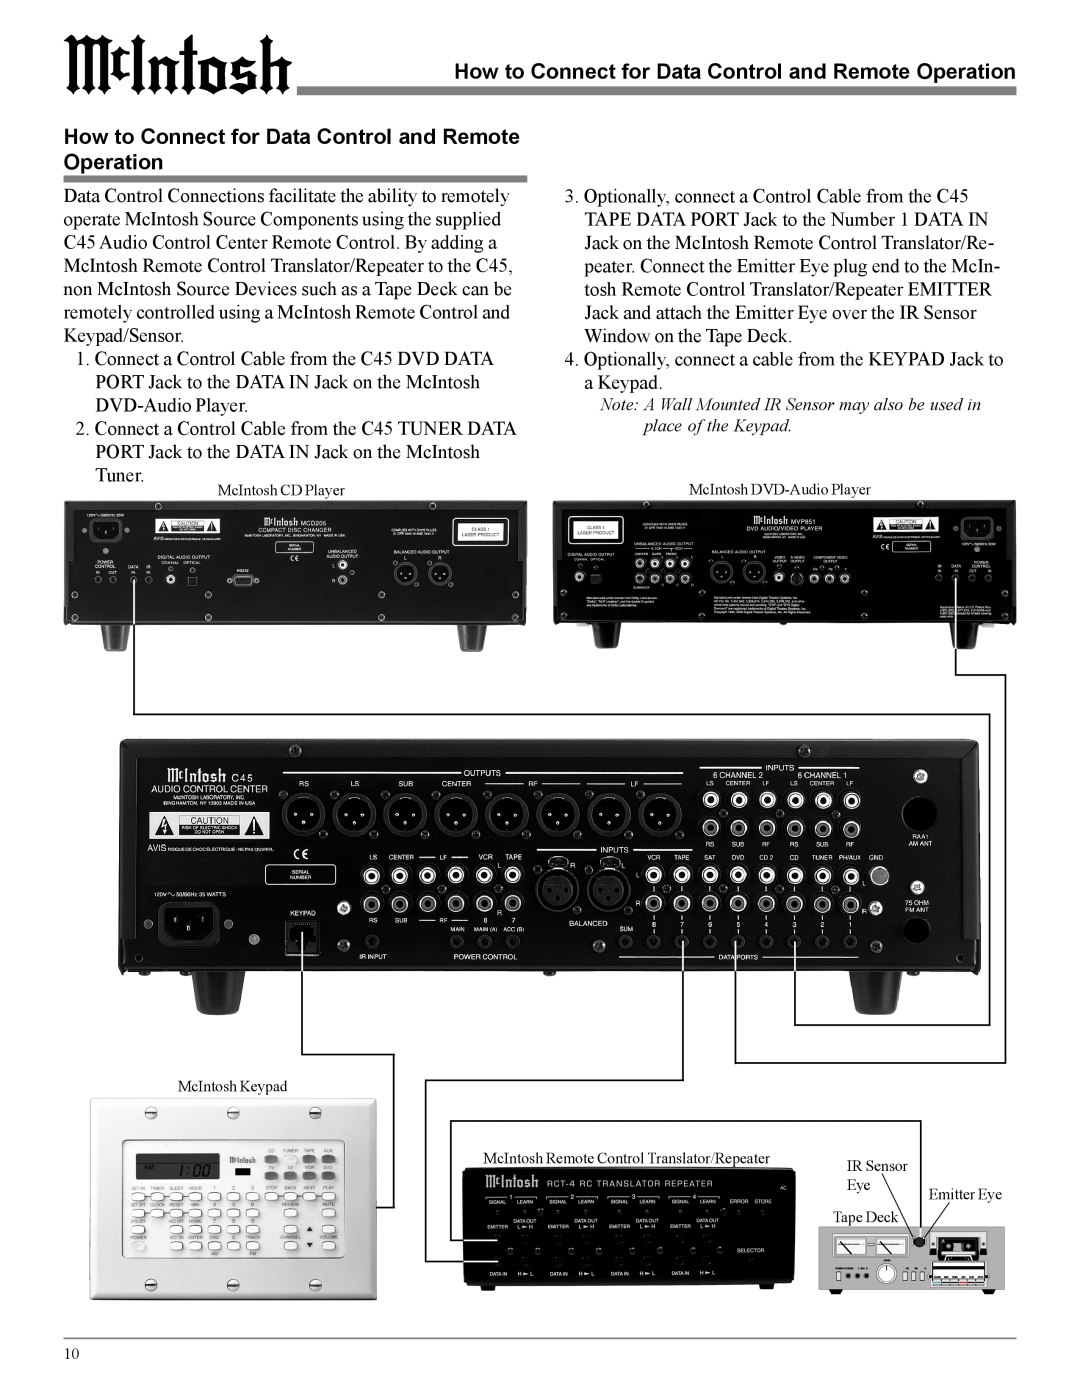 McIntosh C45 McIntosh DVD-AudioPlayer, McIntosh Keypad, McIntosh Remote Control Translator/Repeater, IR Sensor, Tape Deck 